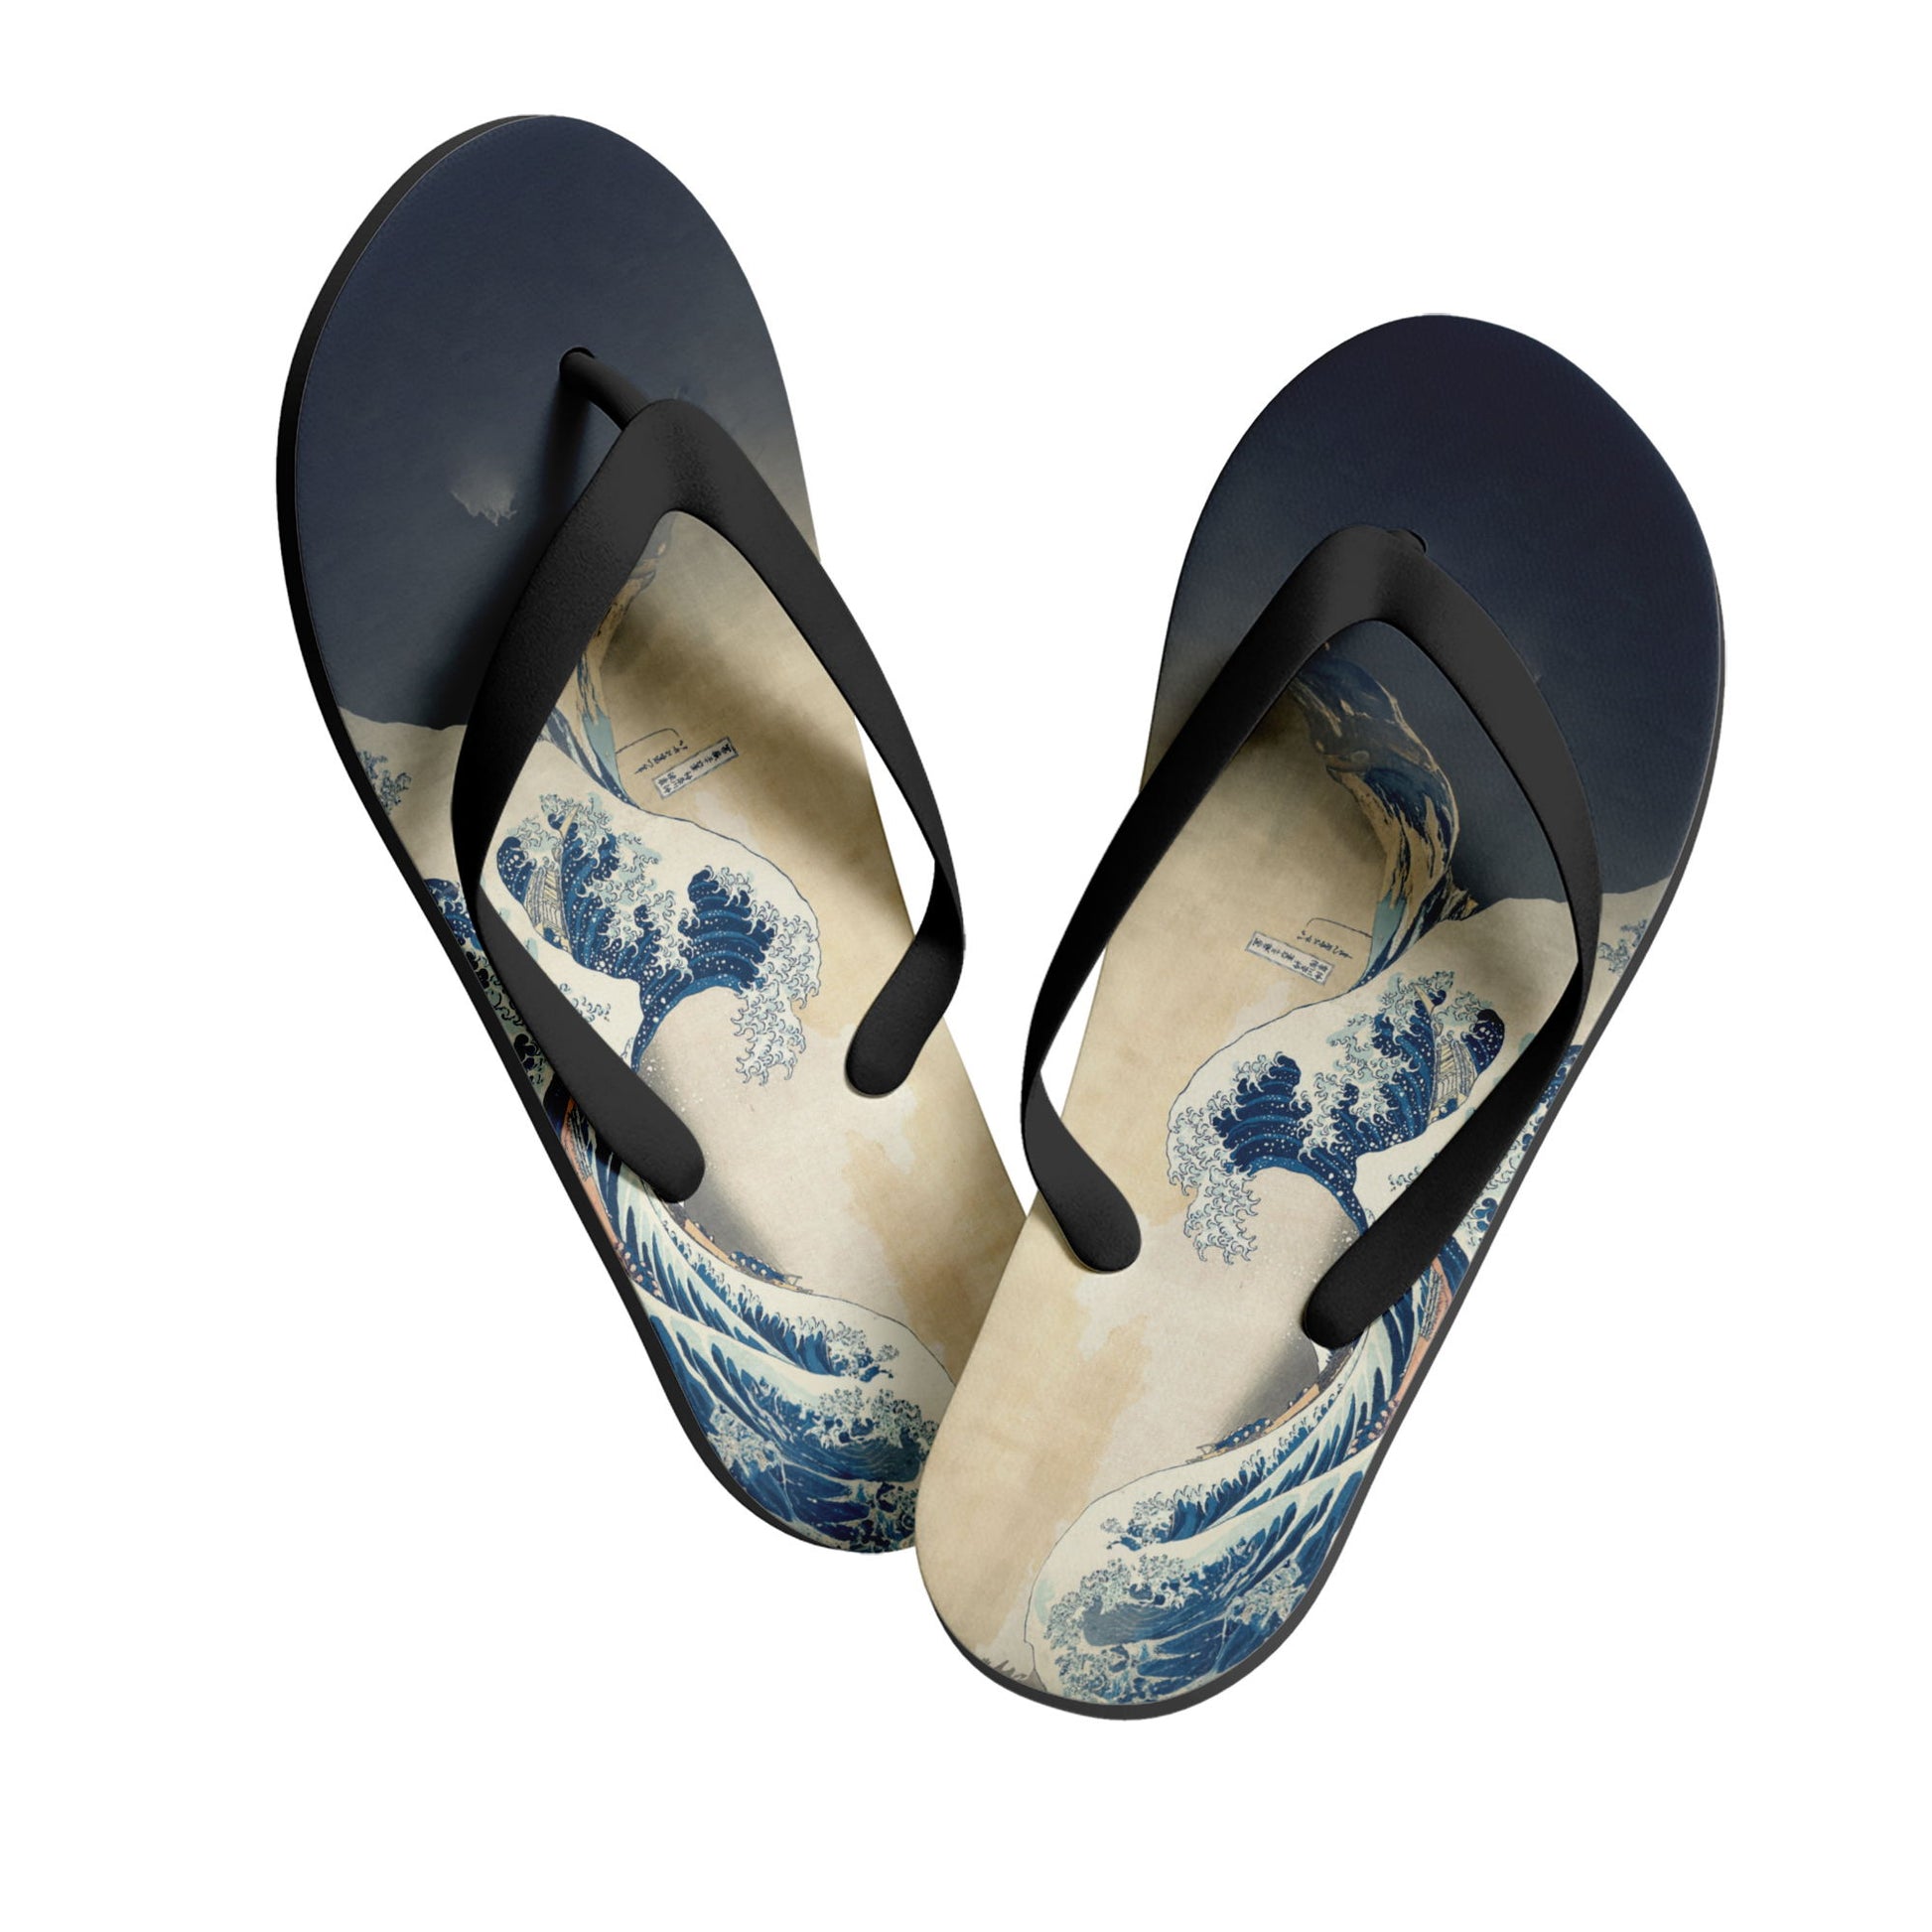 personalized design japanese retro art style custom printed ukiyo-e shoes katsushika hokussai's the great wave off kanagawa slippers 1916 4